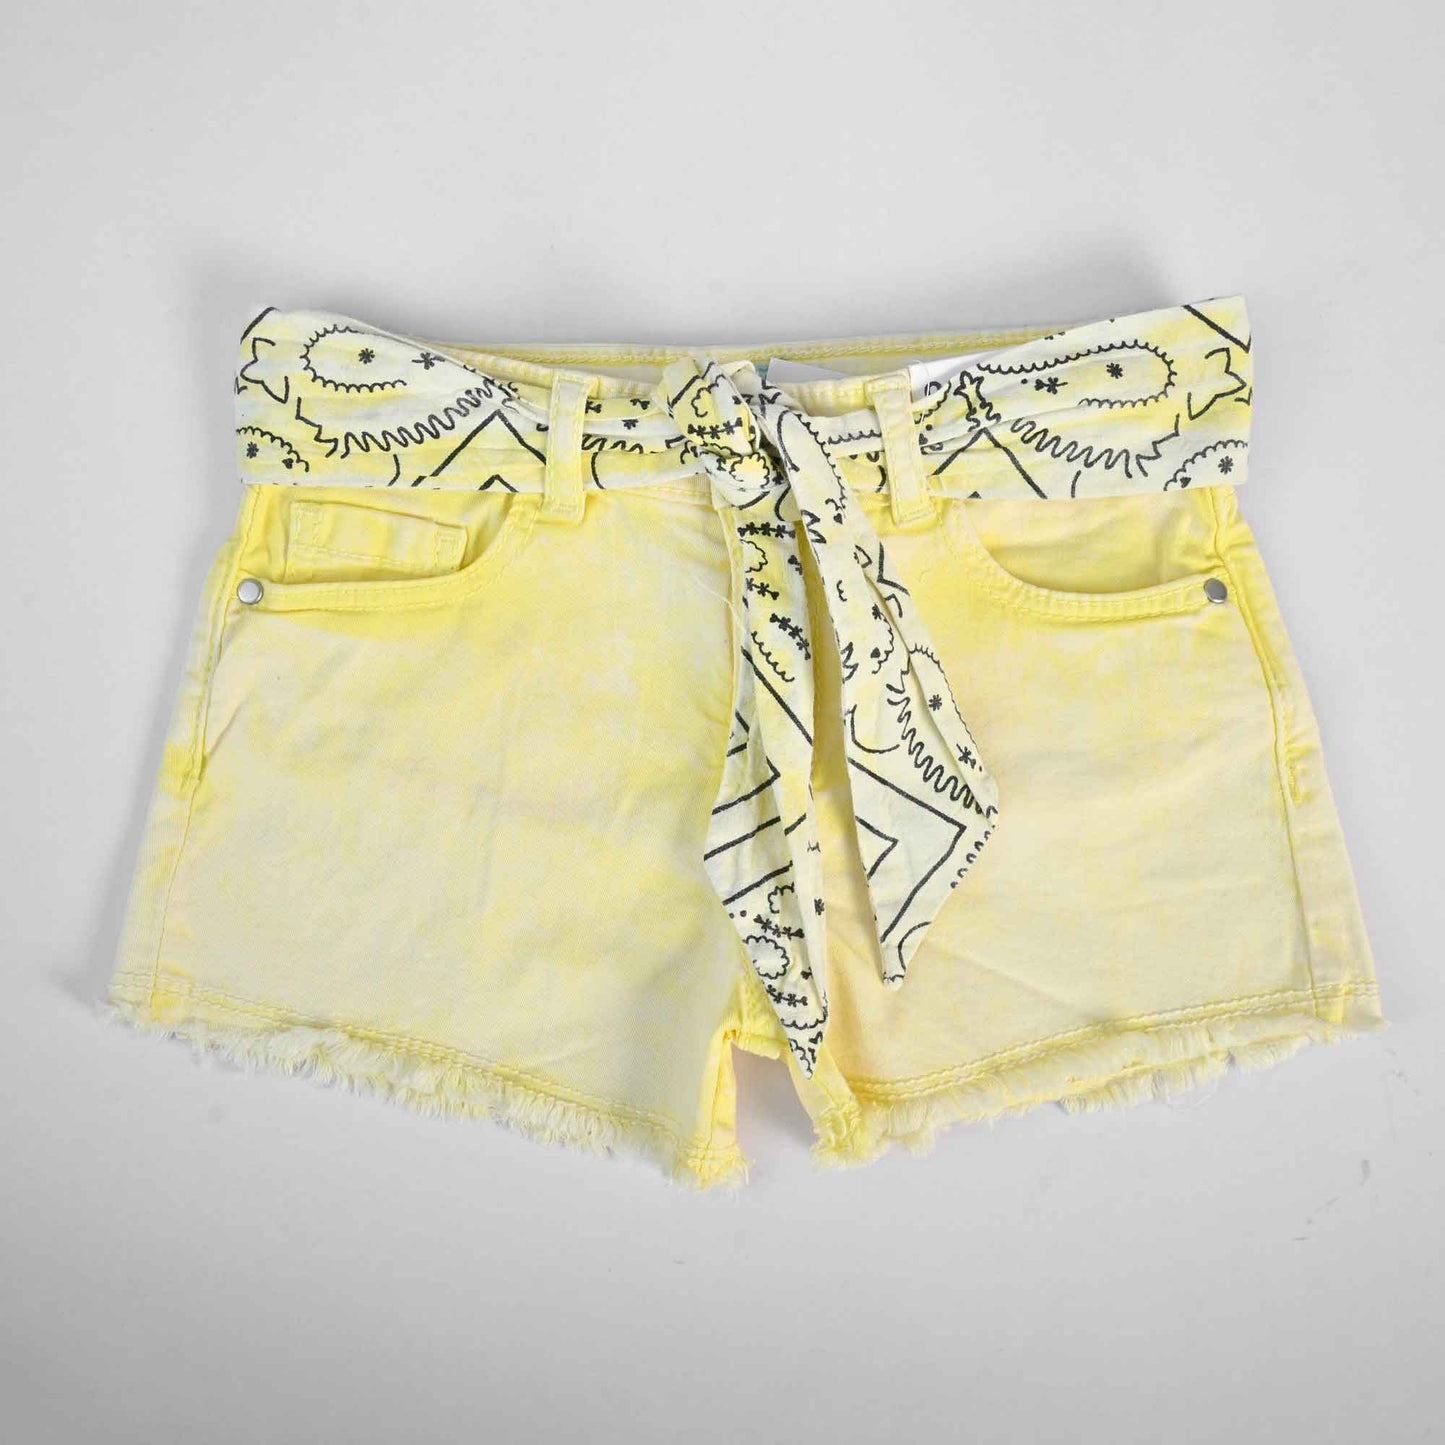 Original Marines Girl's Tie & Dye String Denim Shorts Girl's Shorts Minhas Garments Yellow 3-4 Years 